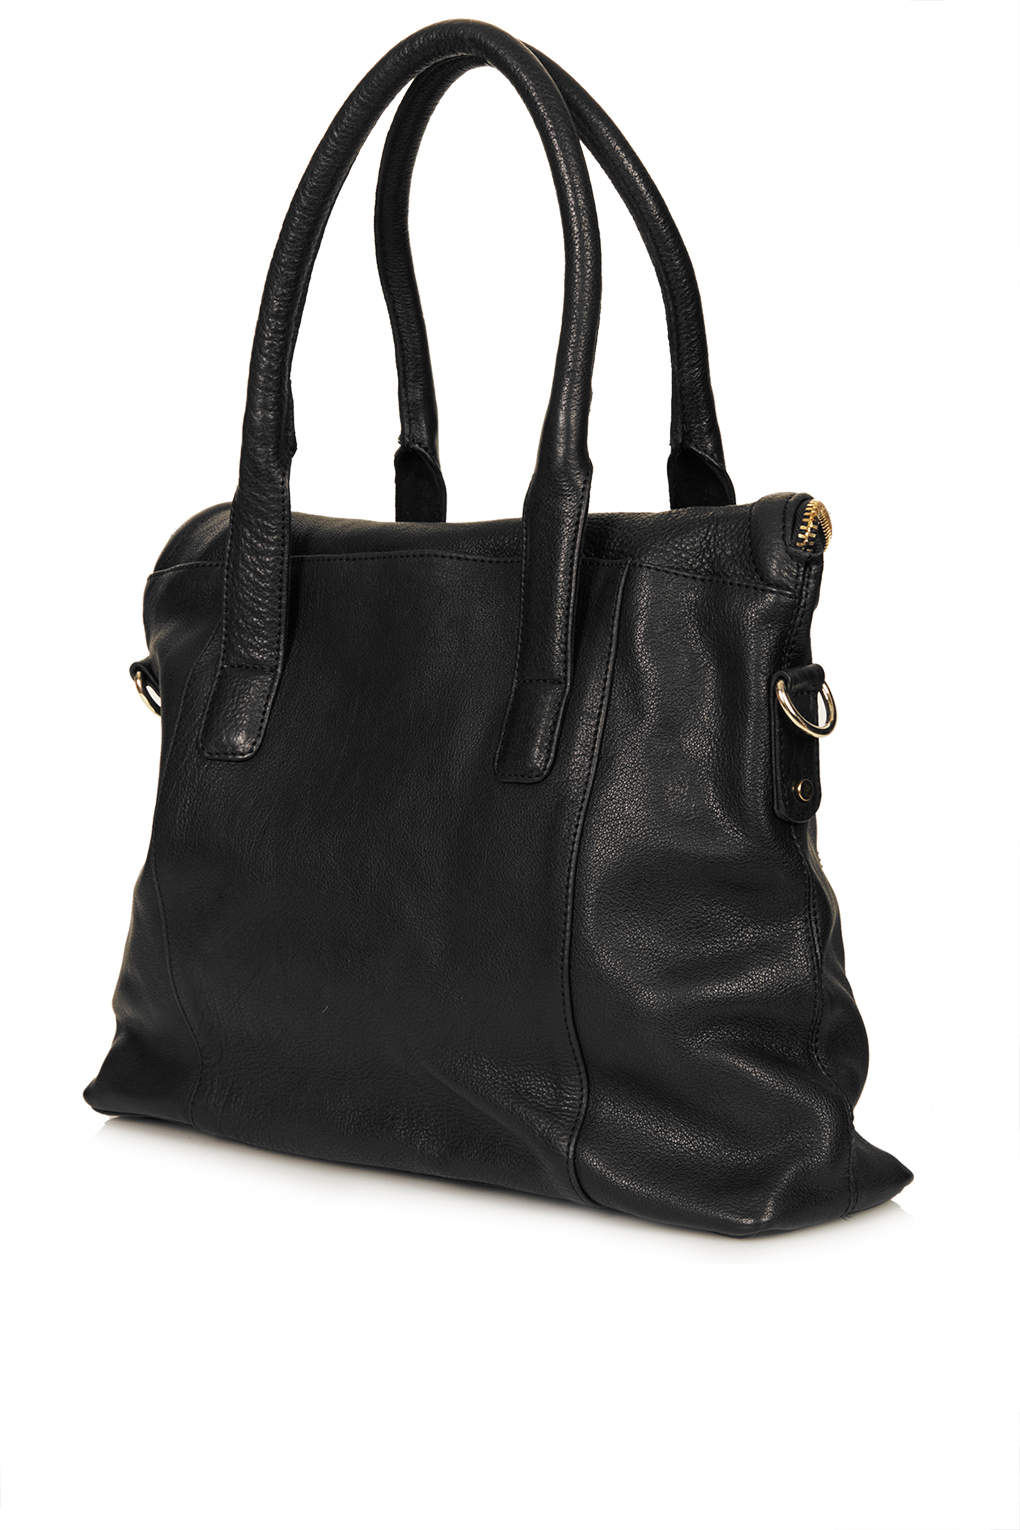 Lyst - Topshop Multi Zip Fold Pocket Leather Tote Bag in Black